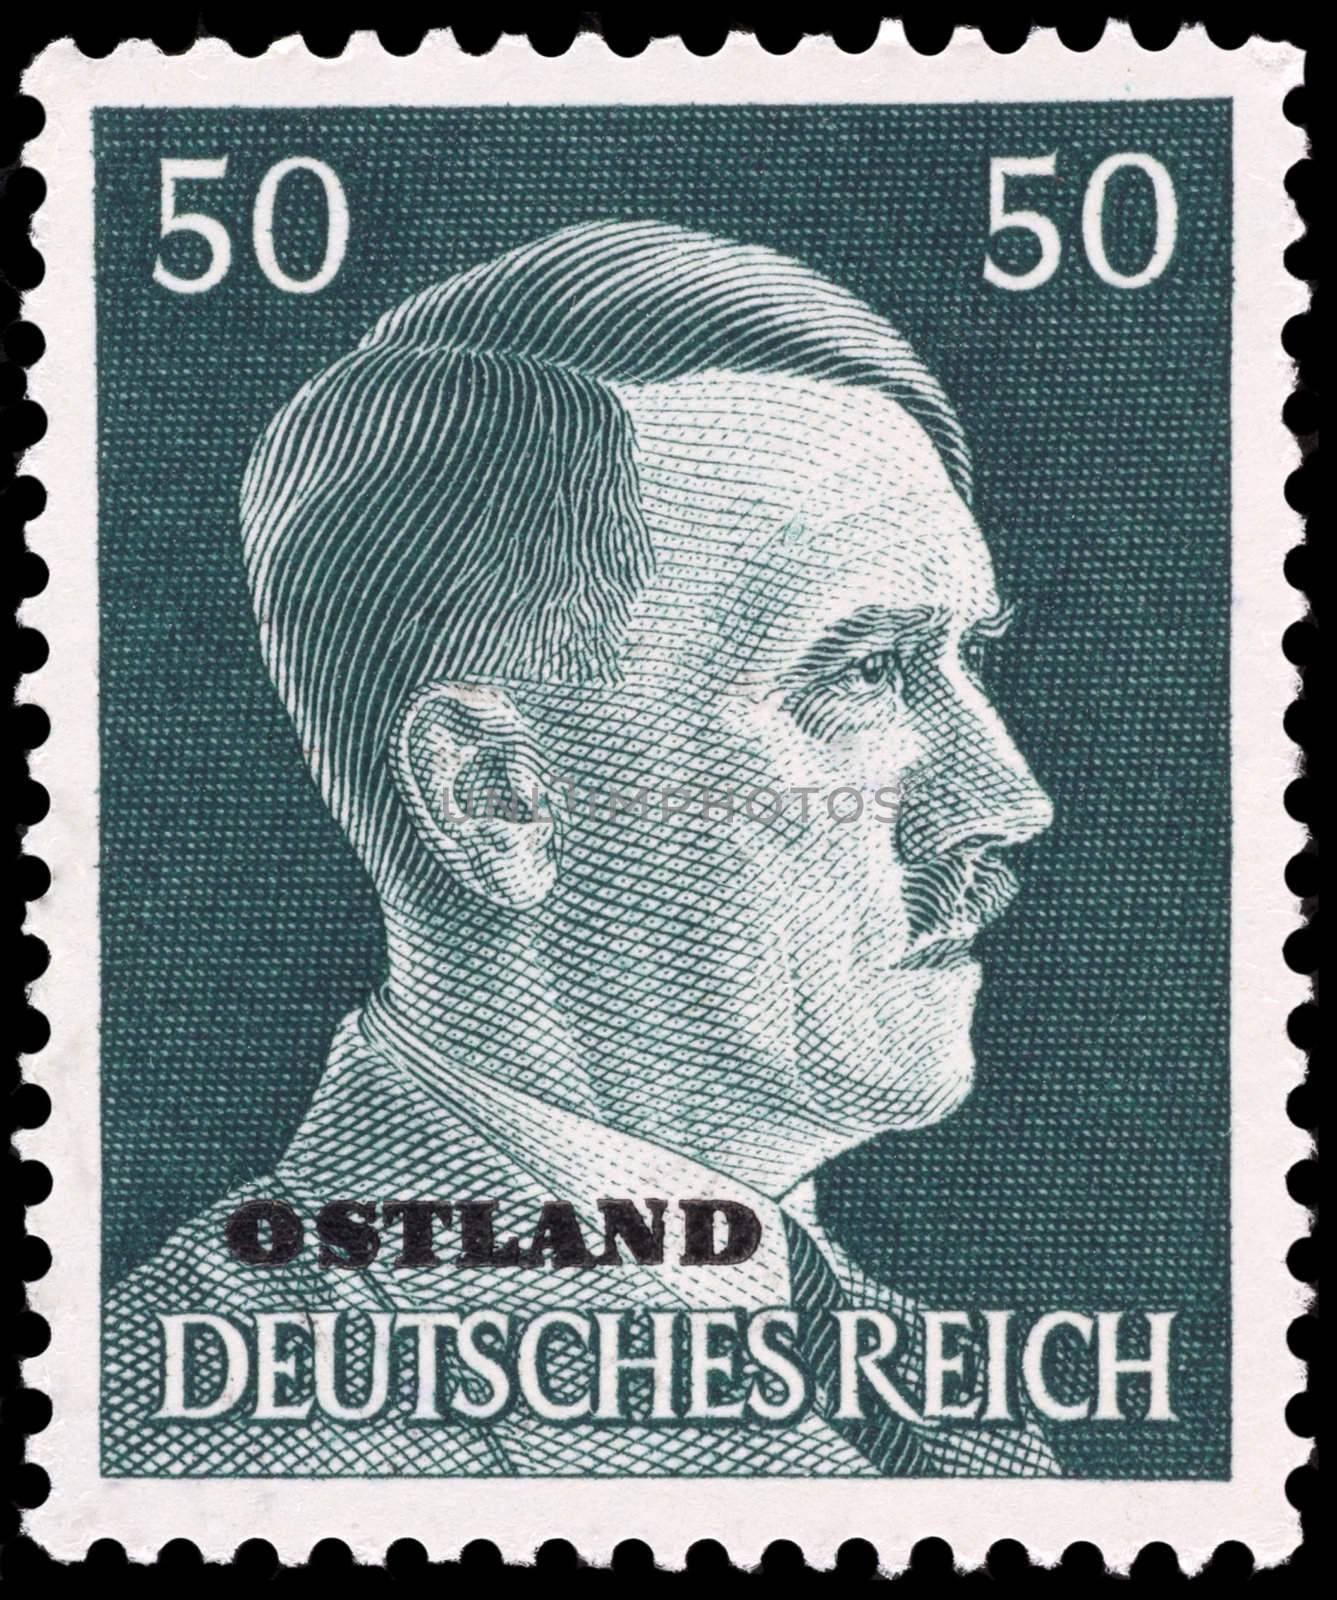 Adolf Hitler on German Stamp by Georgios